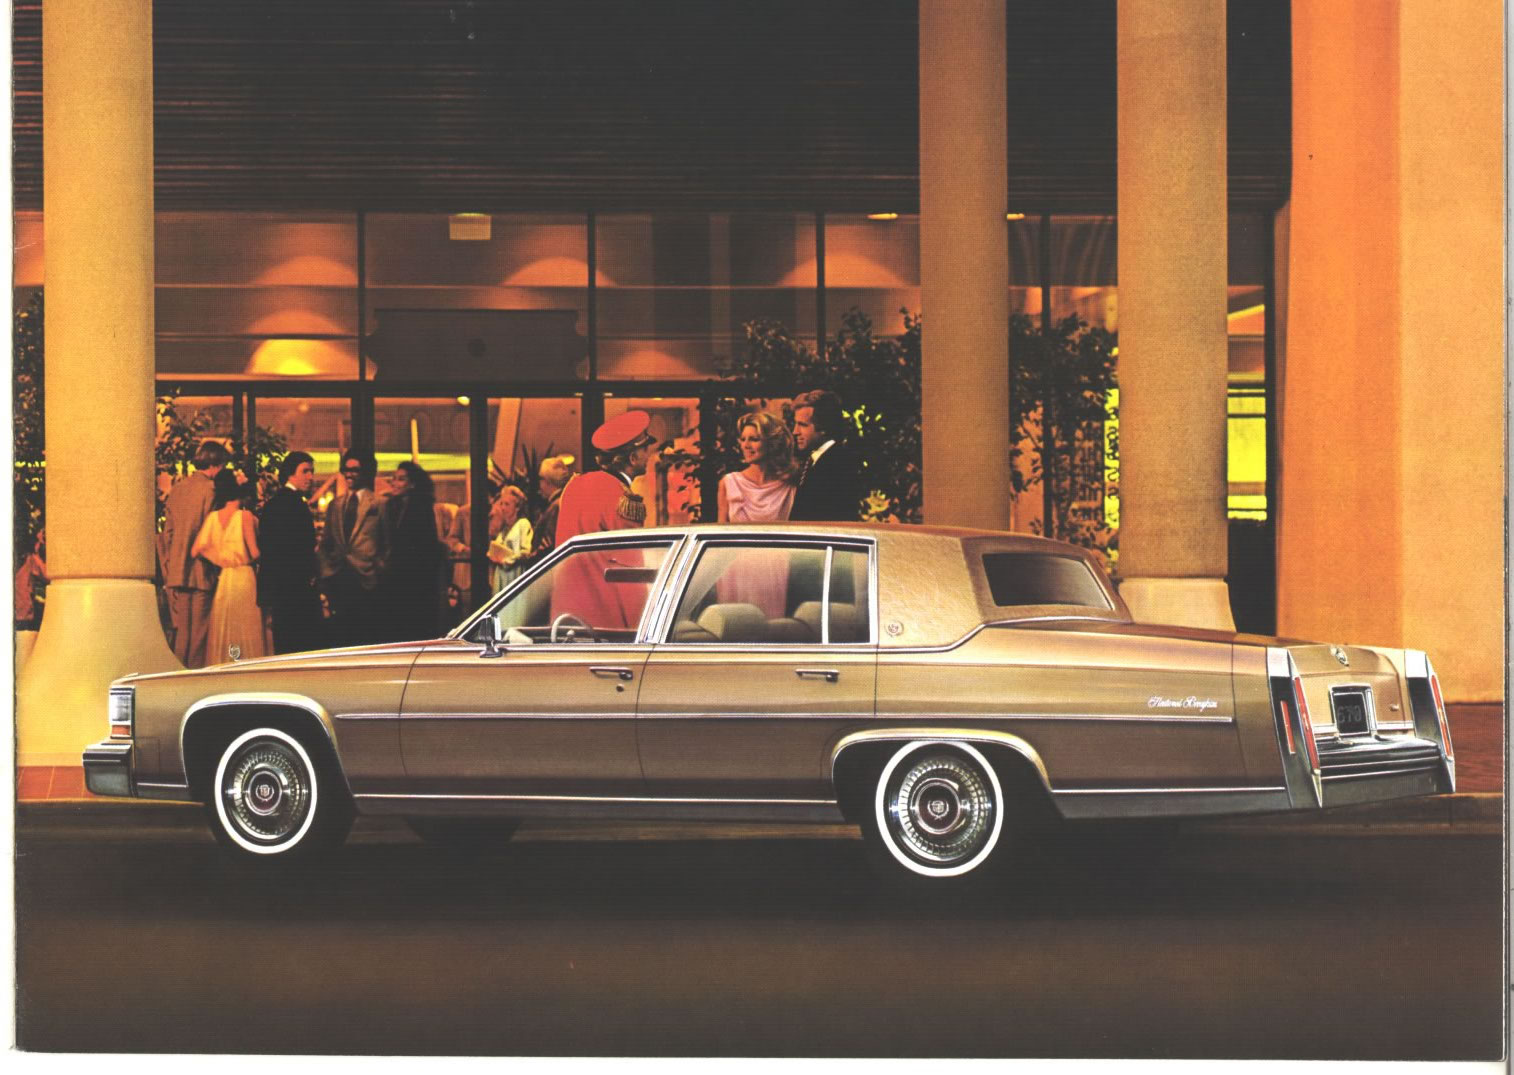 1980 Cadillac Brochure